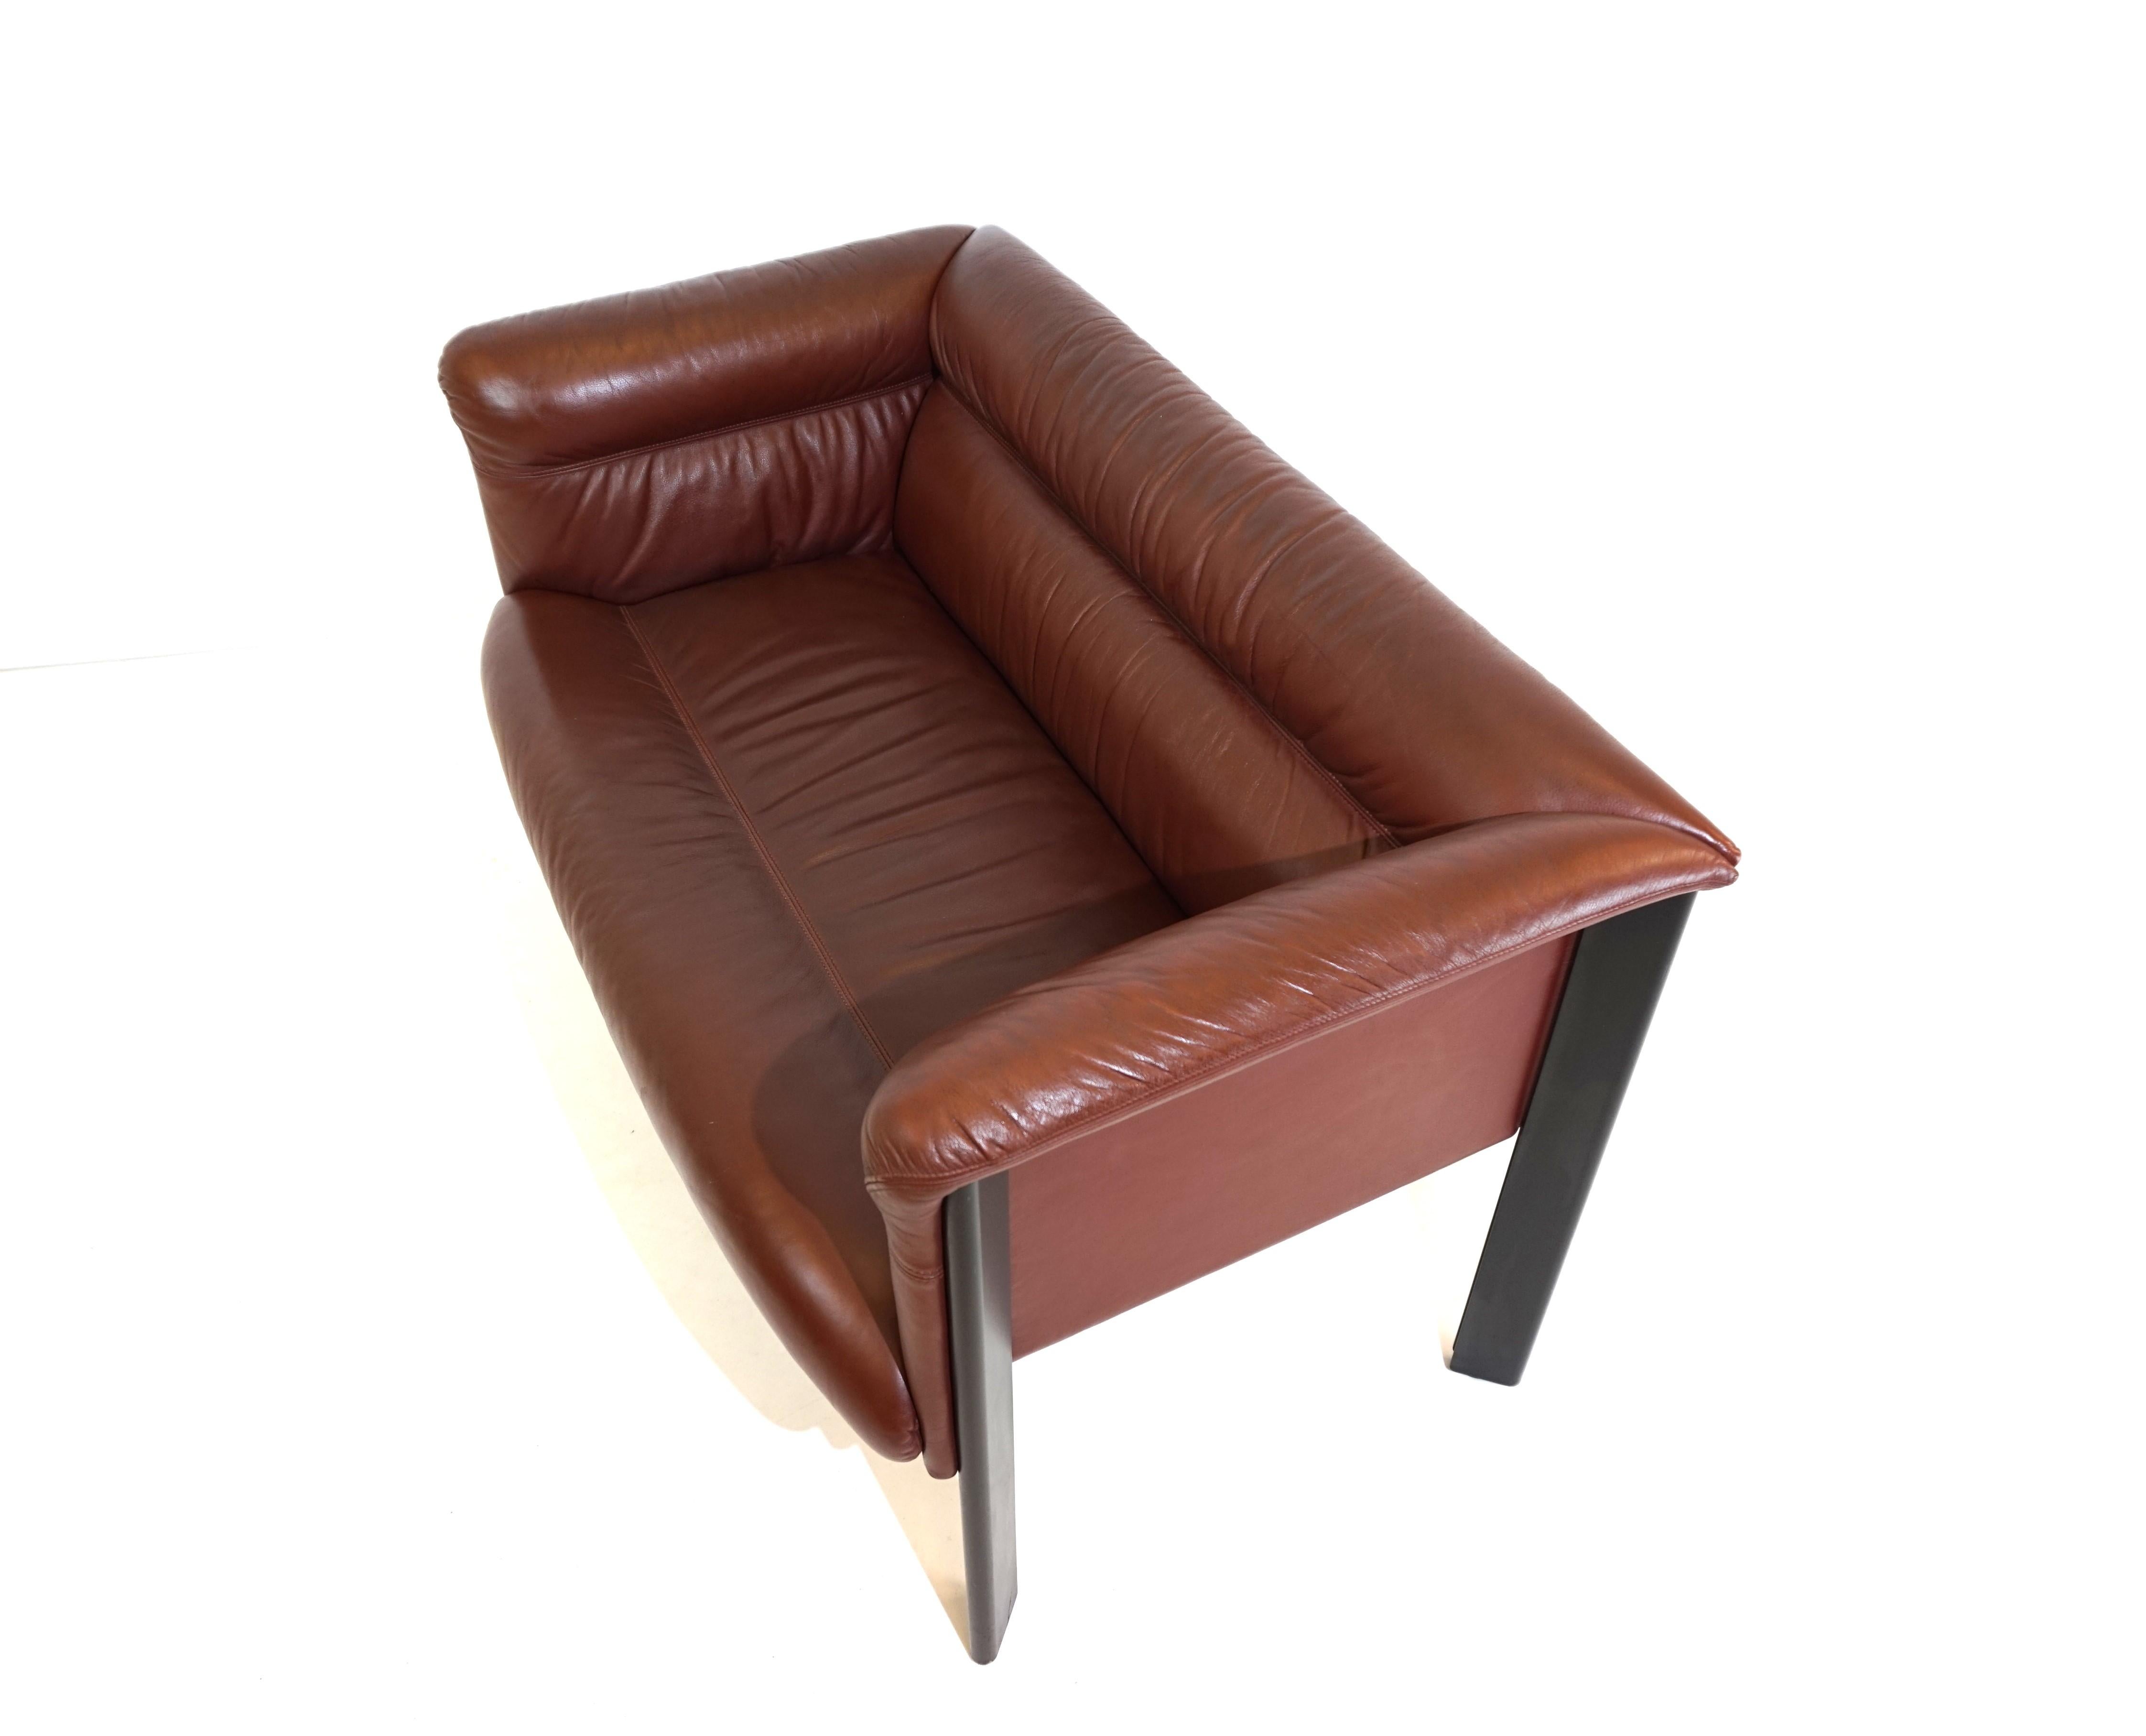 Poltrona Frau Interlude leather bench 2 seater by Marco Zanuso 8